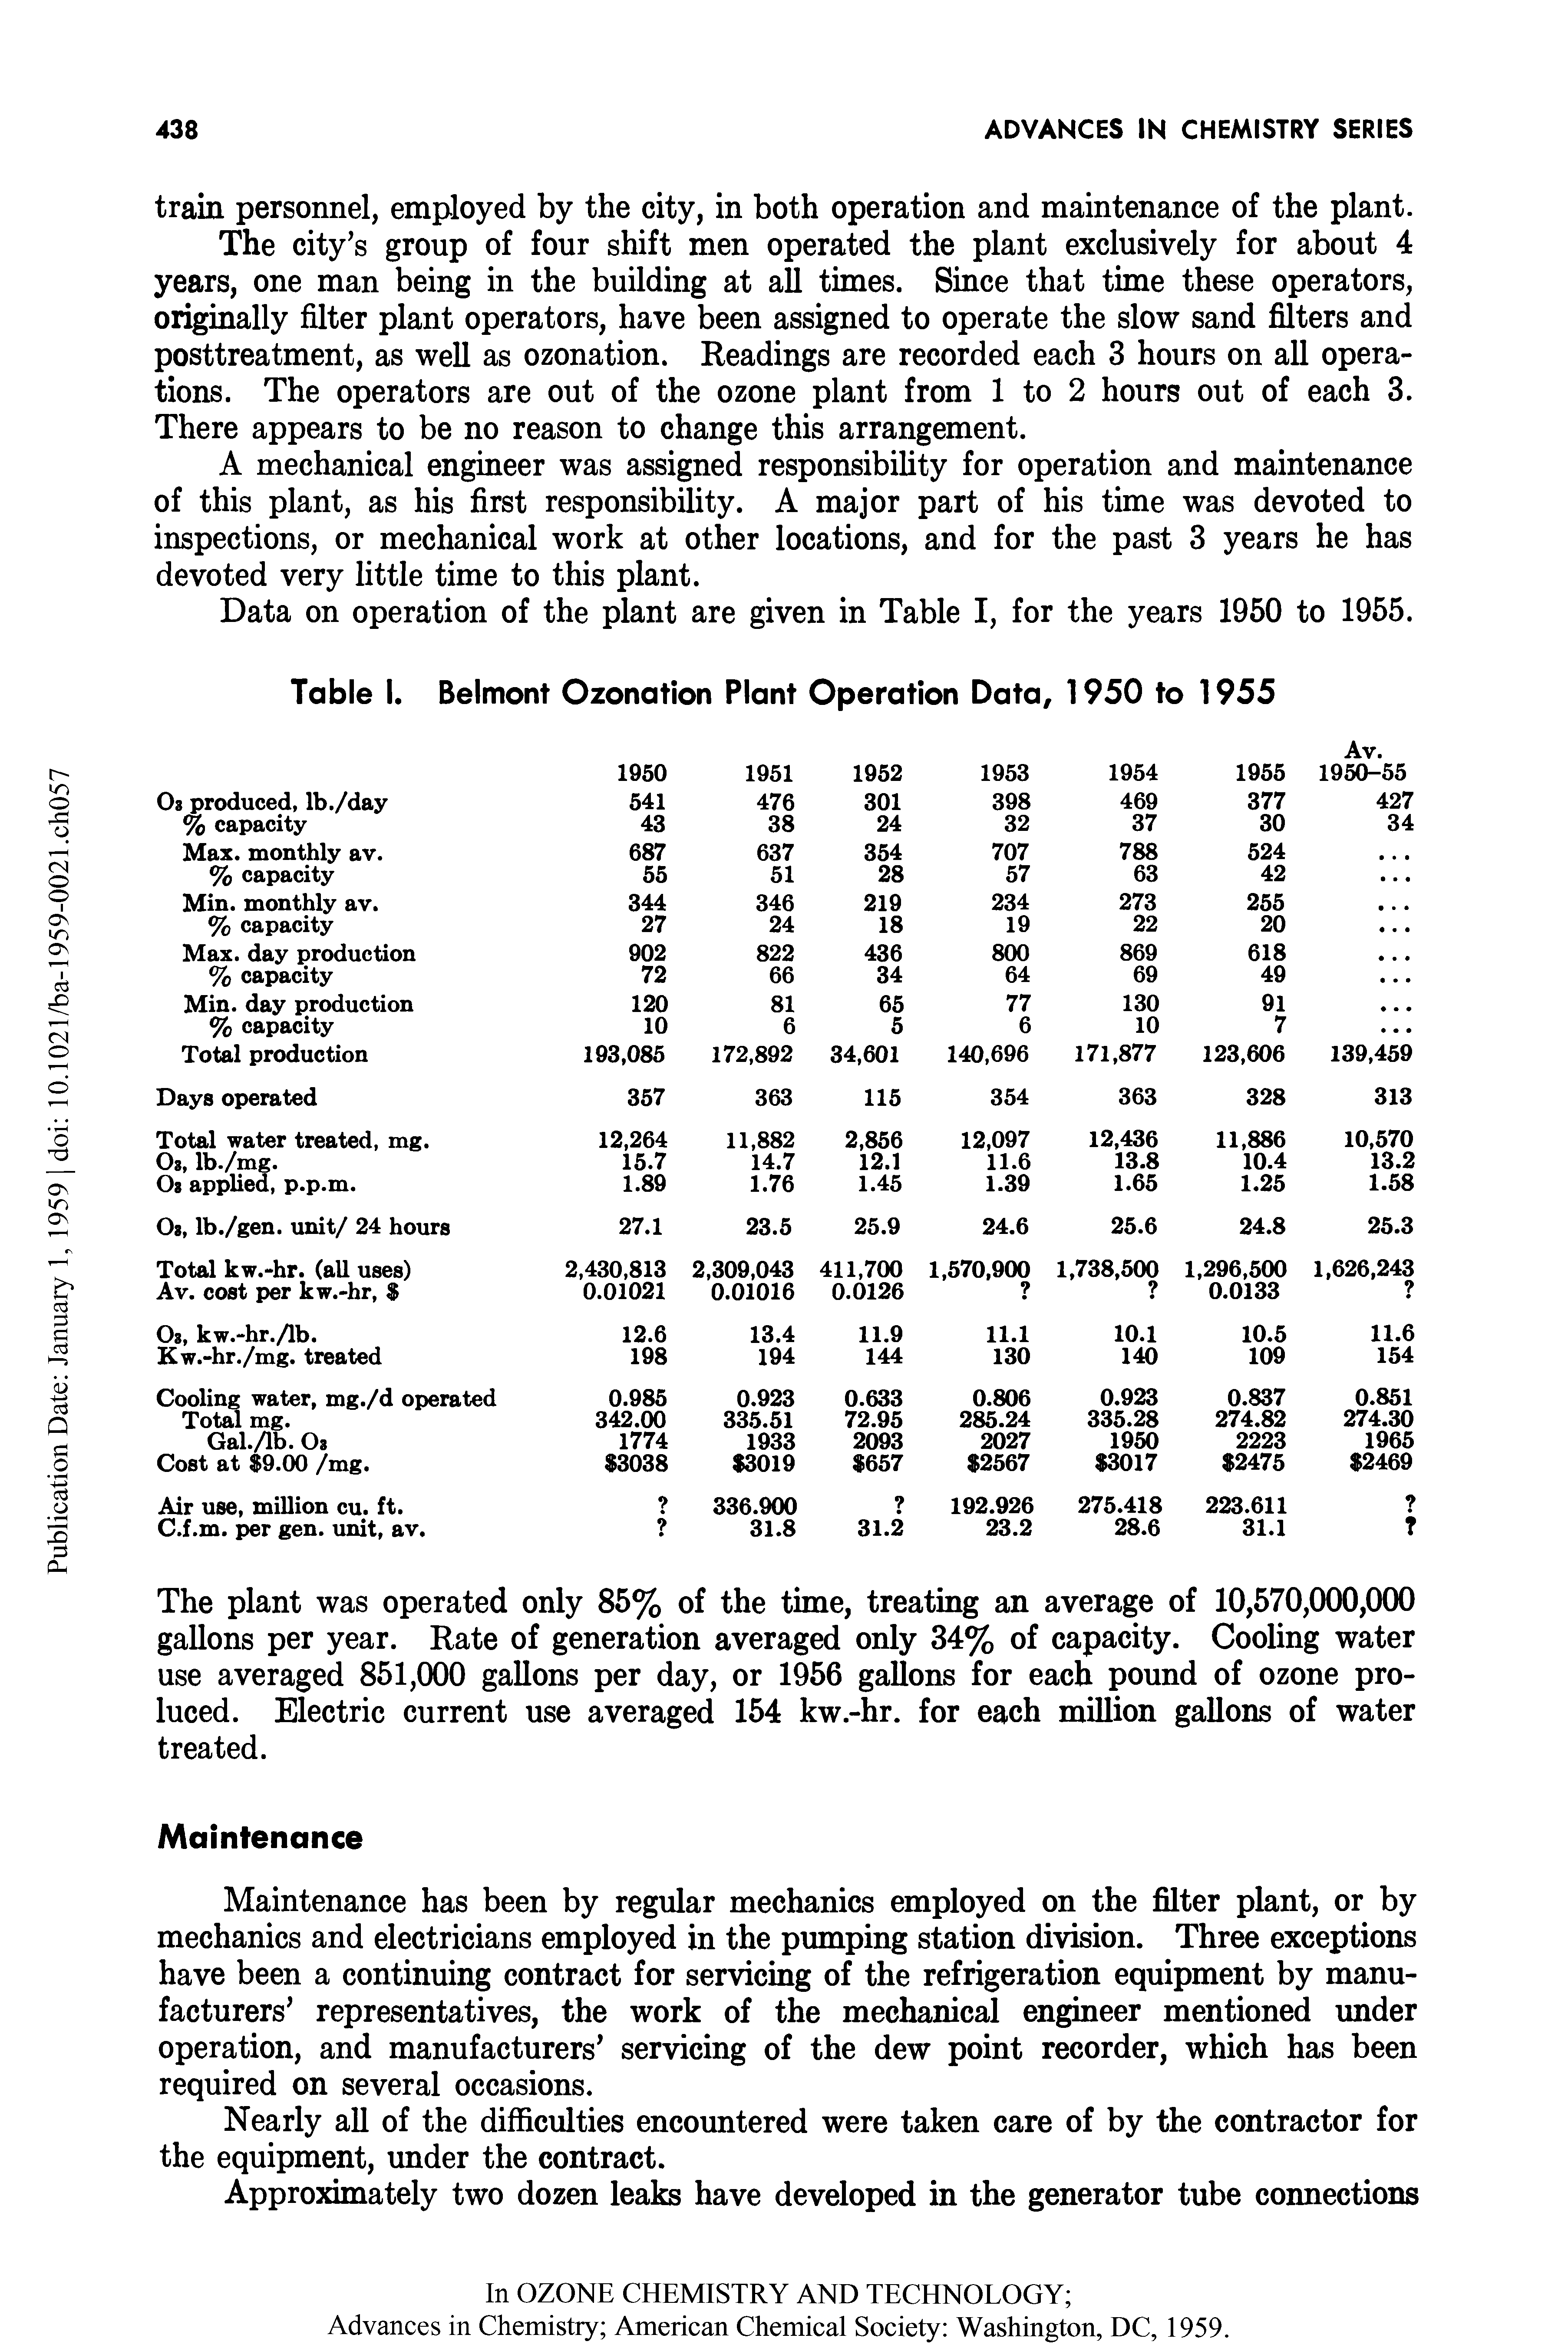 Table I. Belmont Ozonation Plant Operation Data, 1950 to 1955...